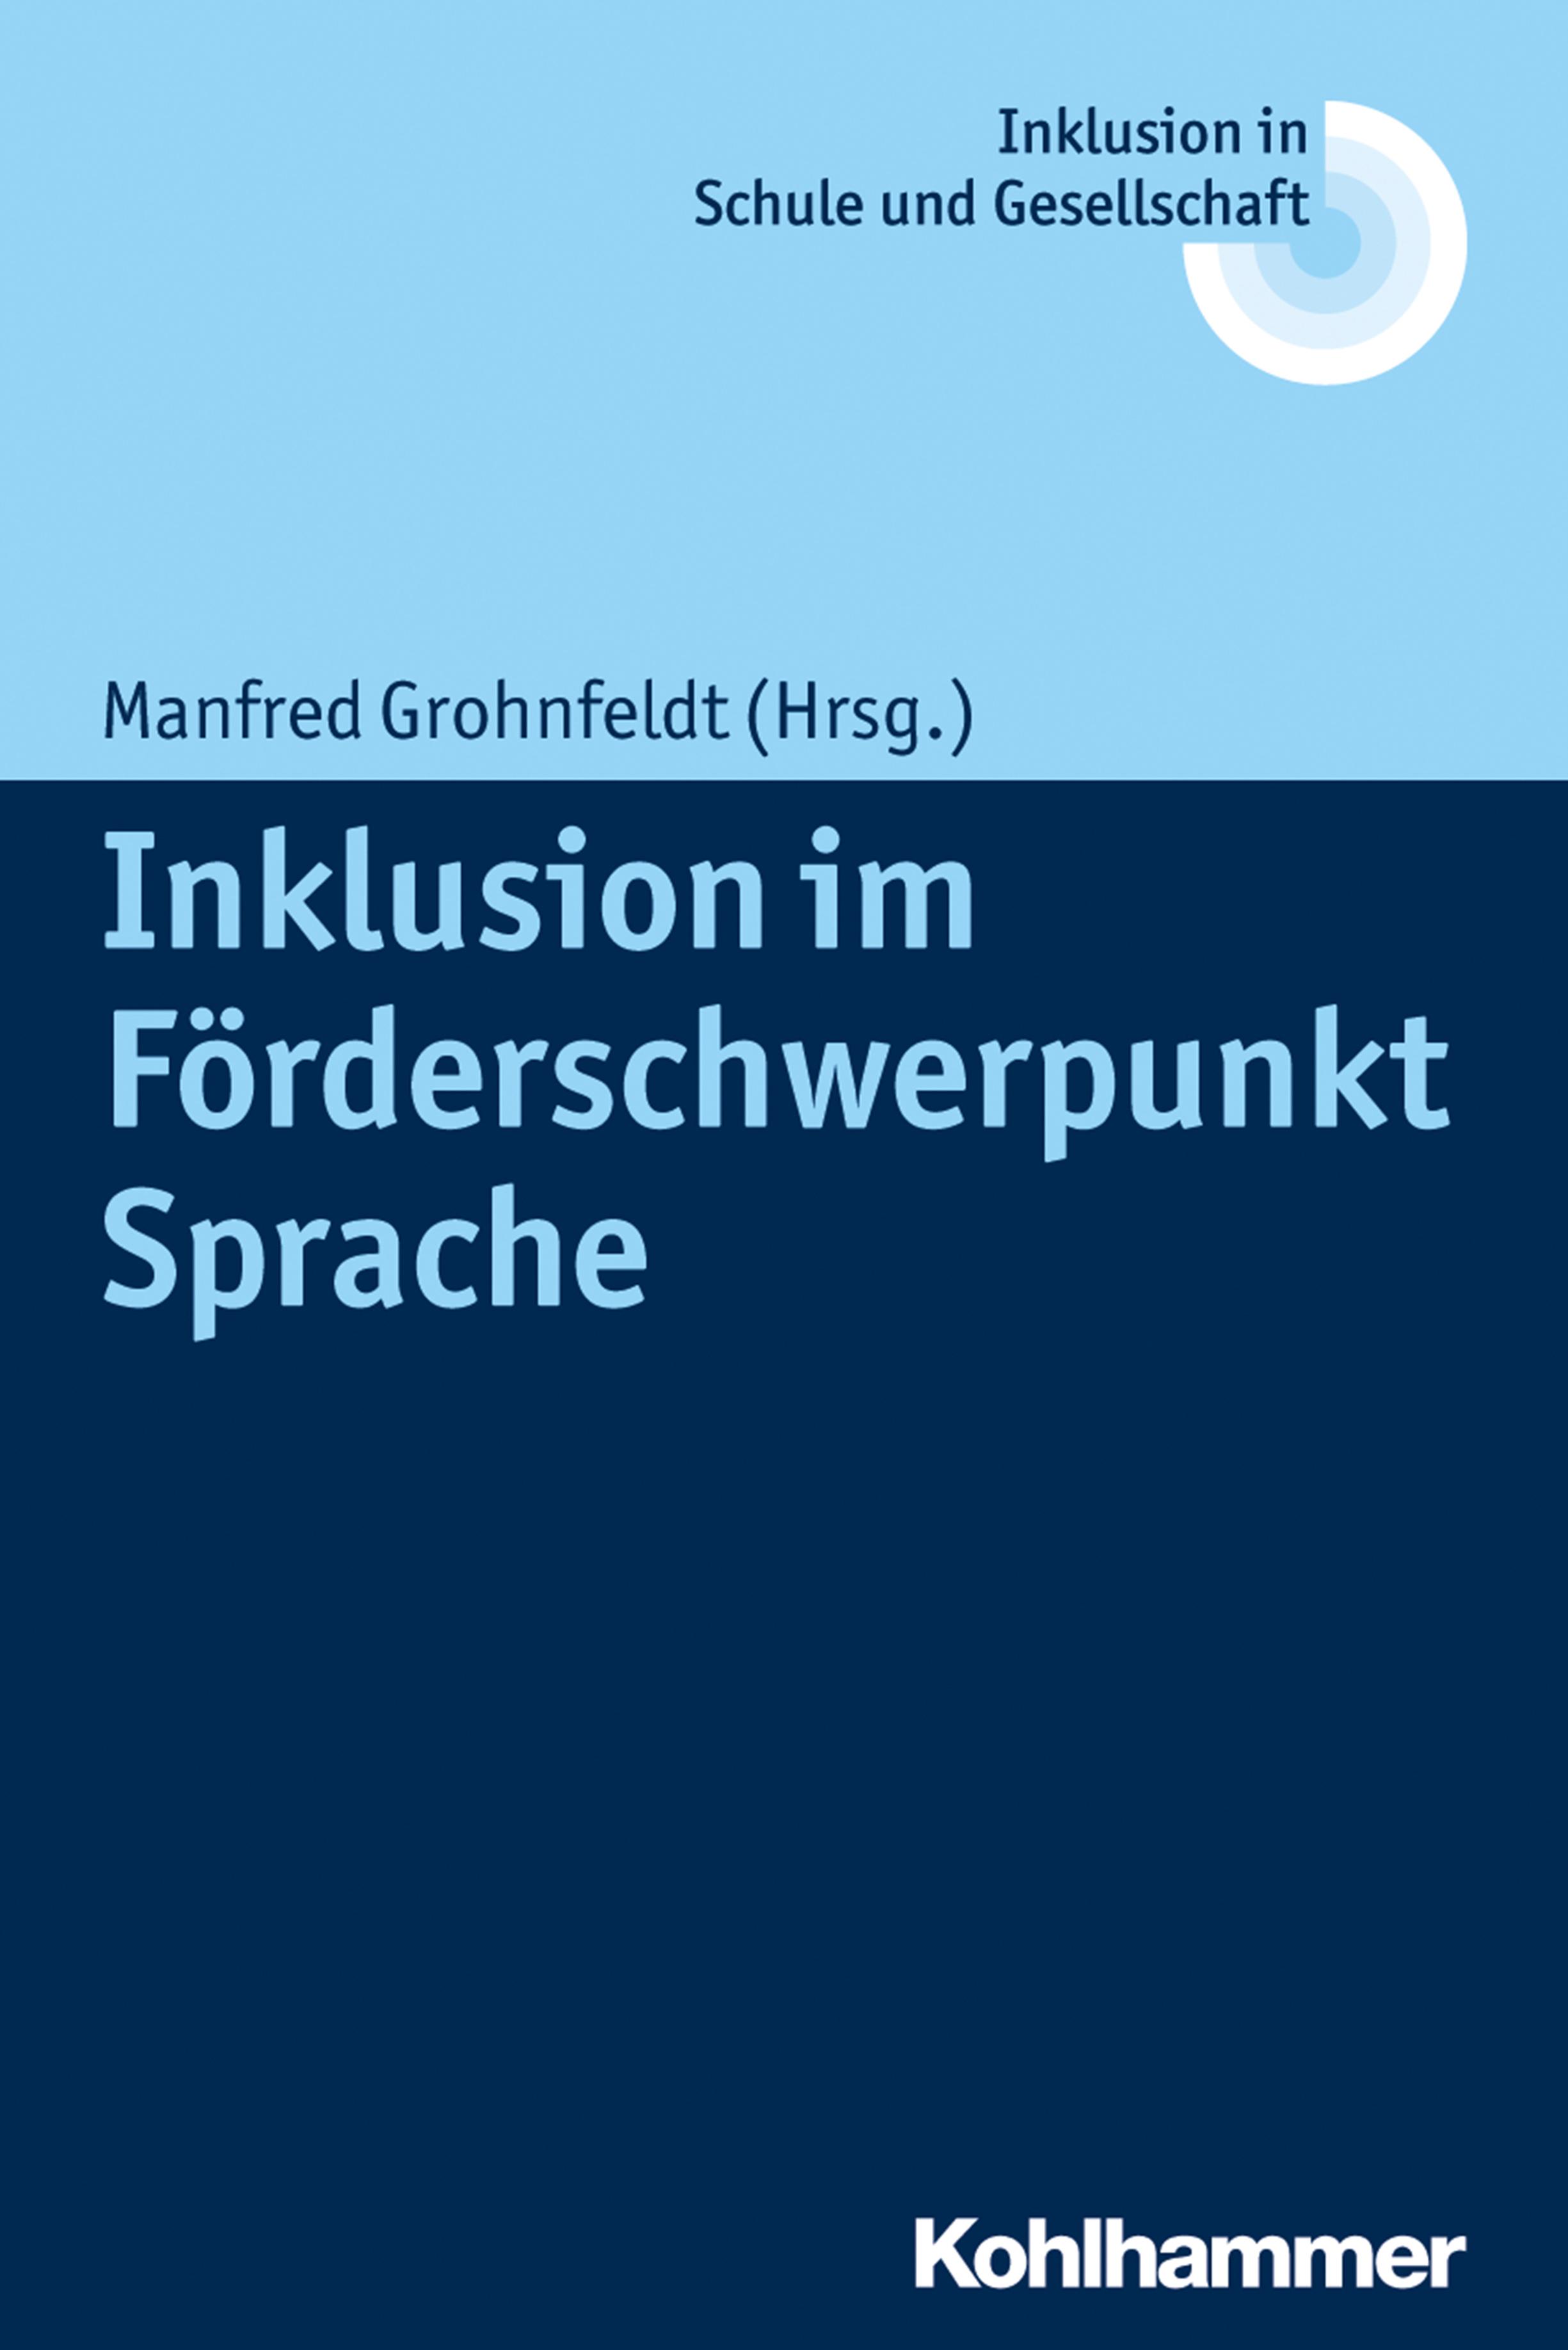 Inklusion im Foerderschwerpunkt Sprache - Grohnfeldt, Manfred|Fischer, Erhard|Heimlich, Ulrich|Kahlert, Joachim|Lelgemann, Reinhard